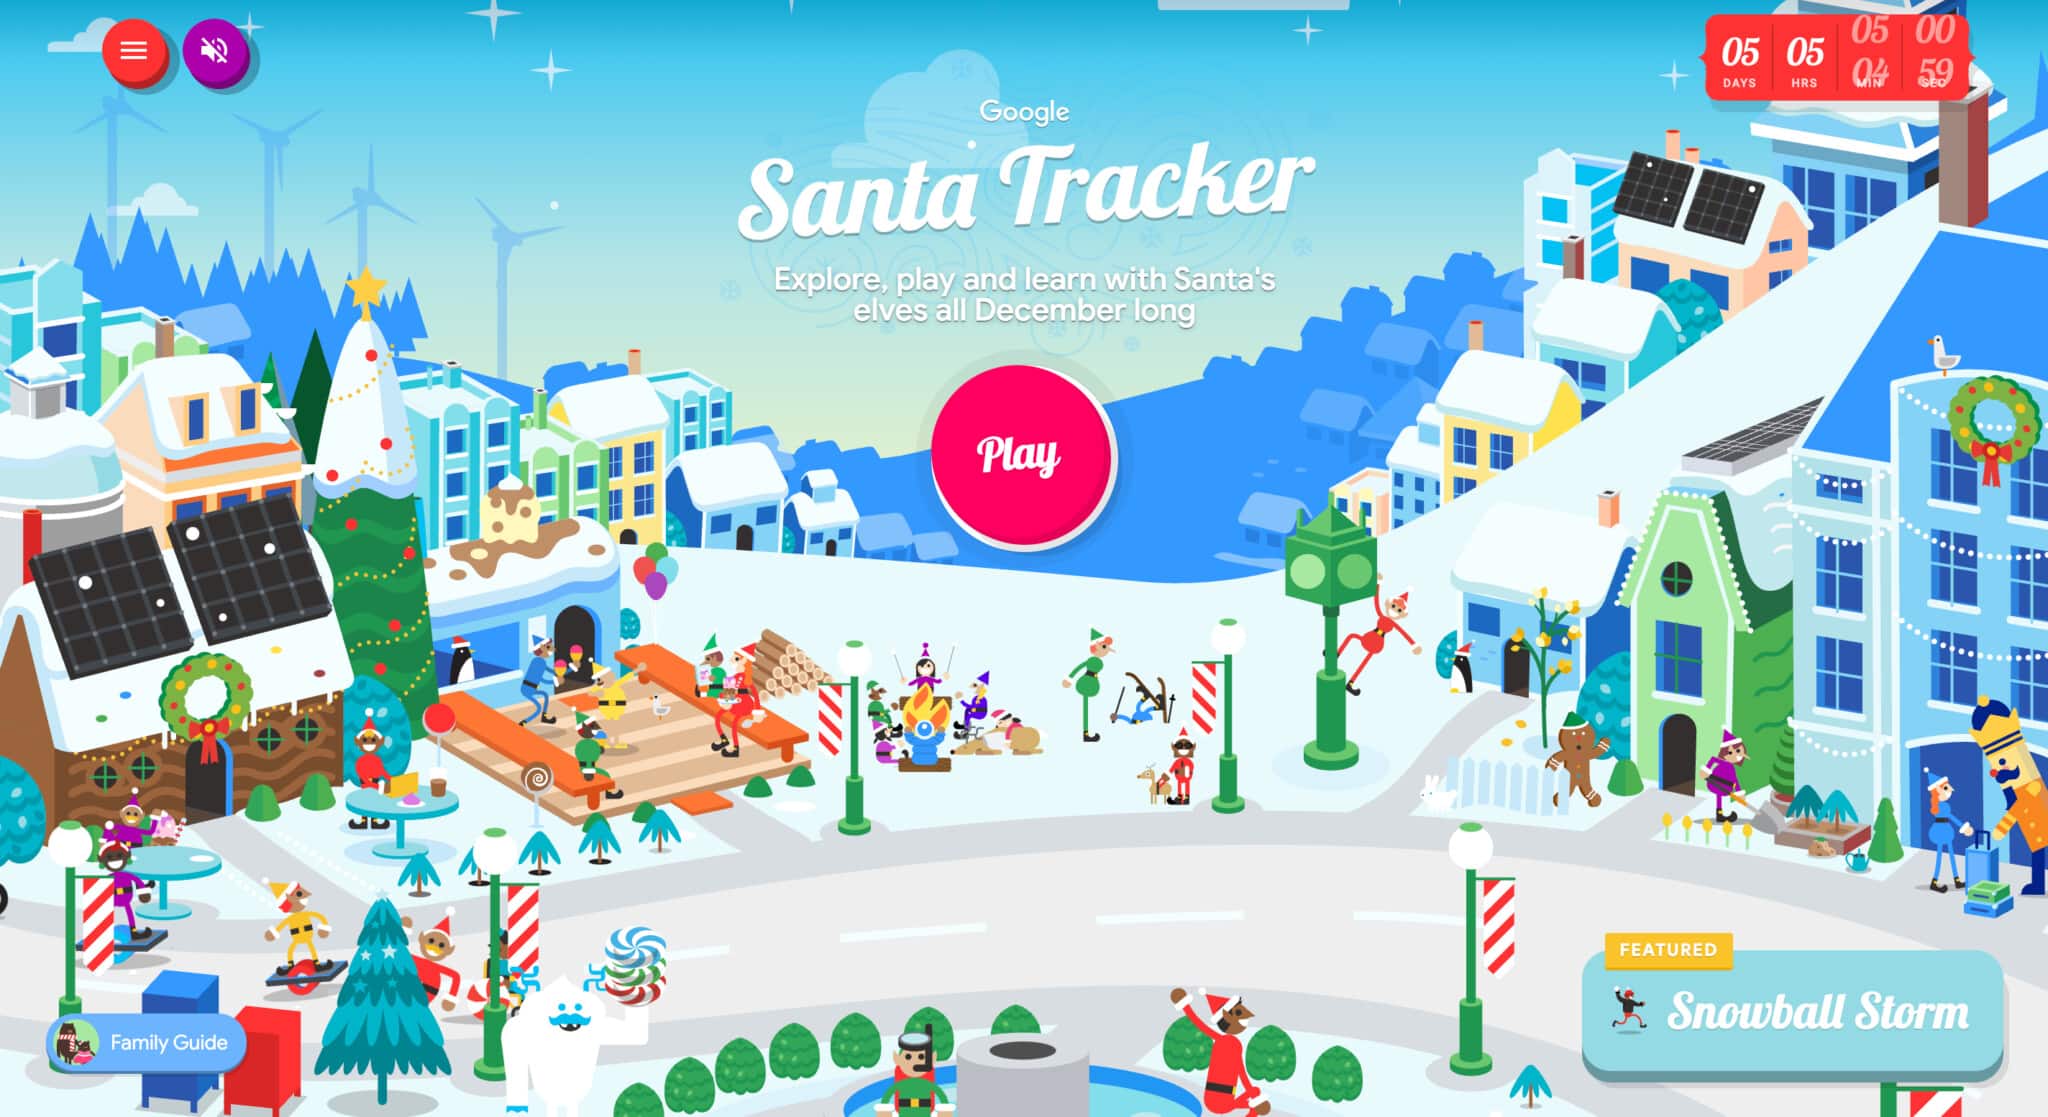 Google Santa Tracker best app to track Santa